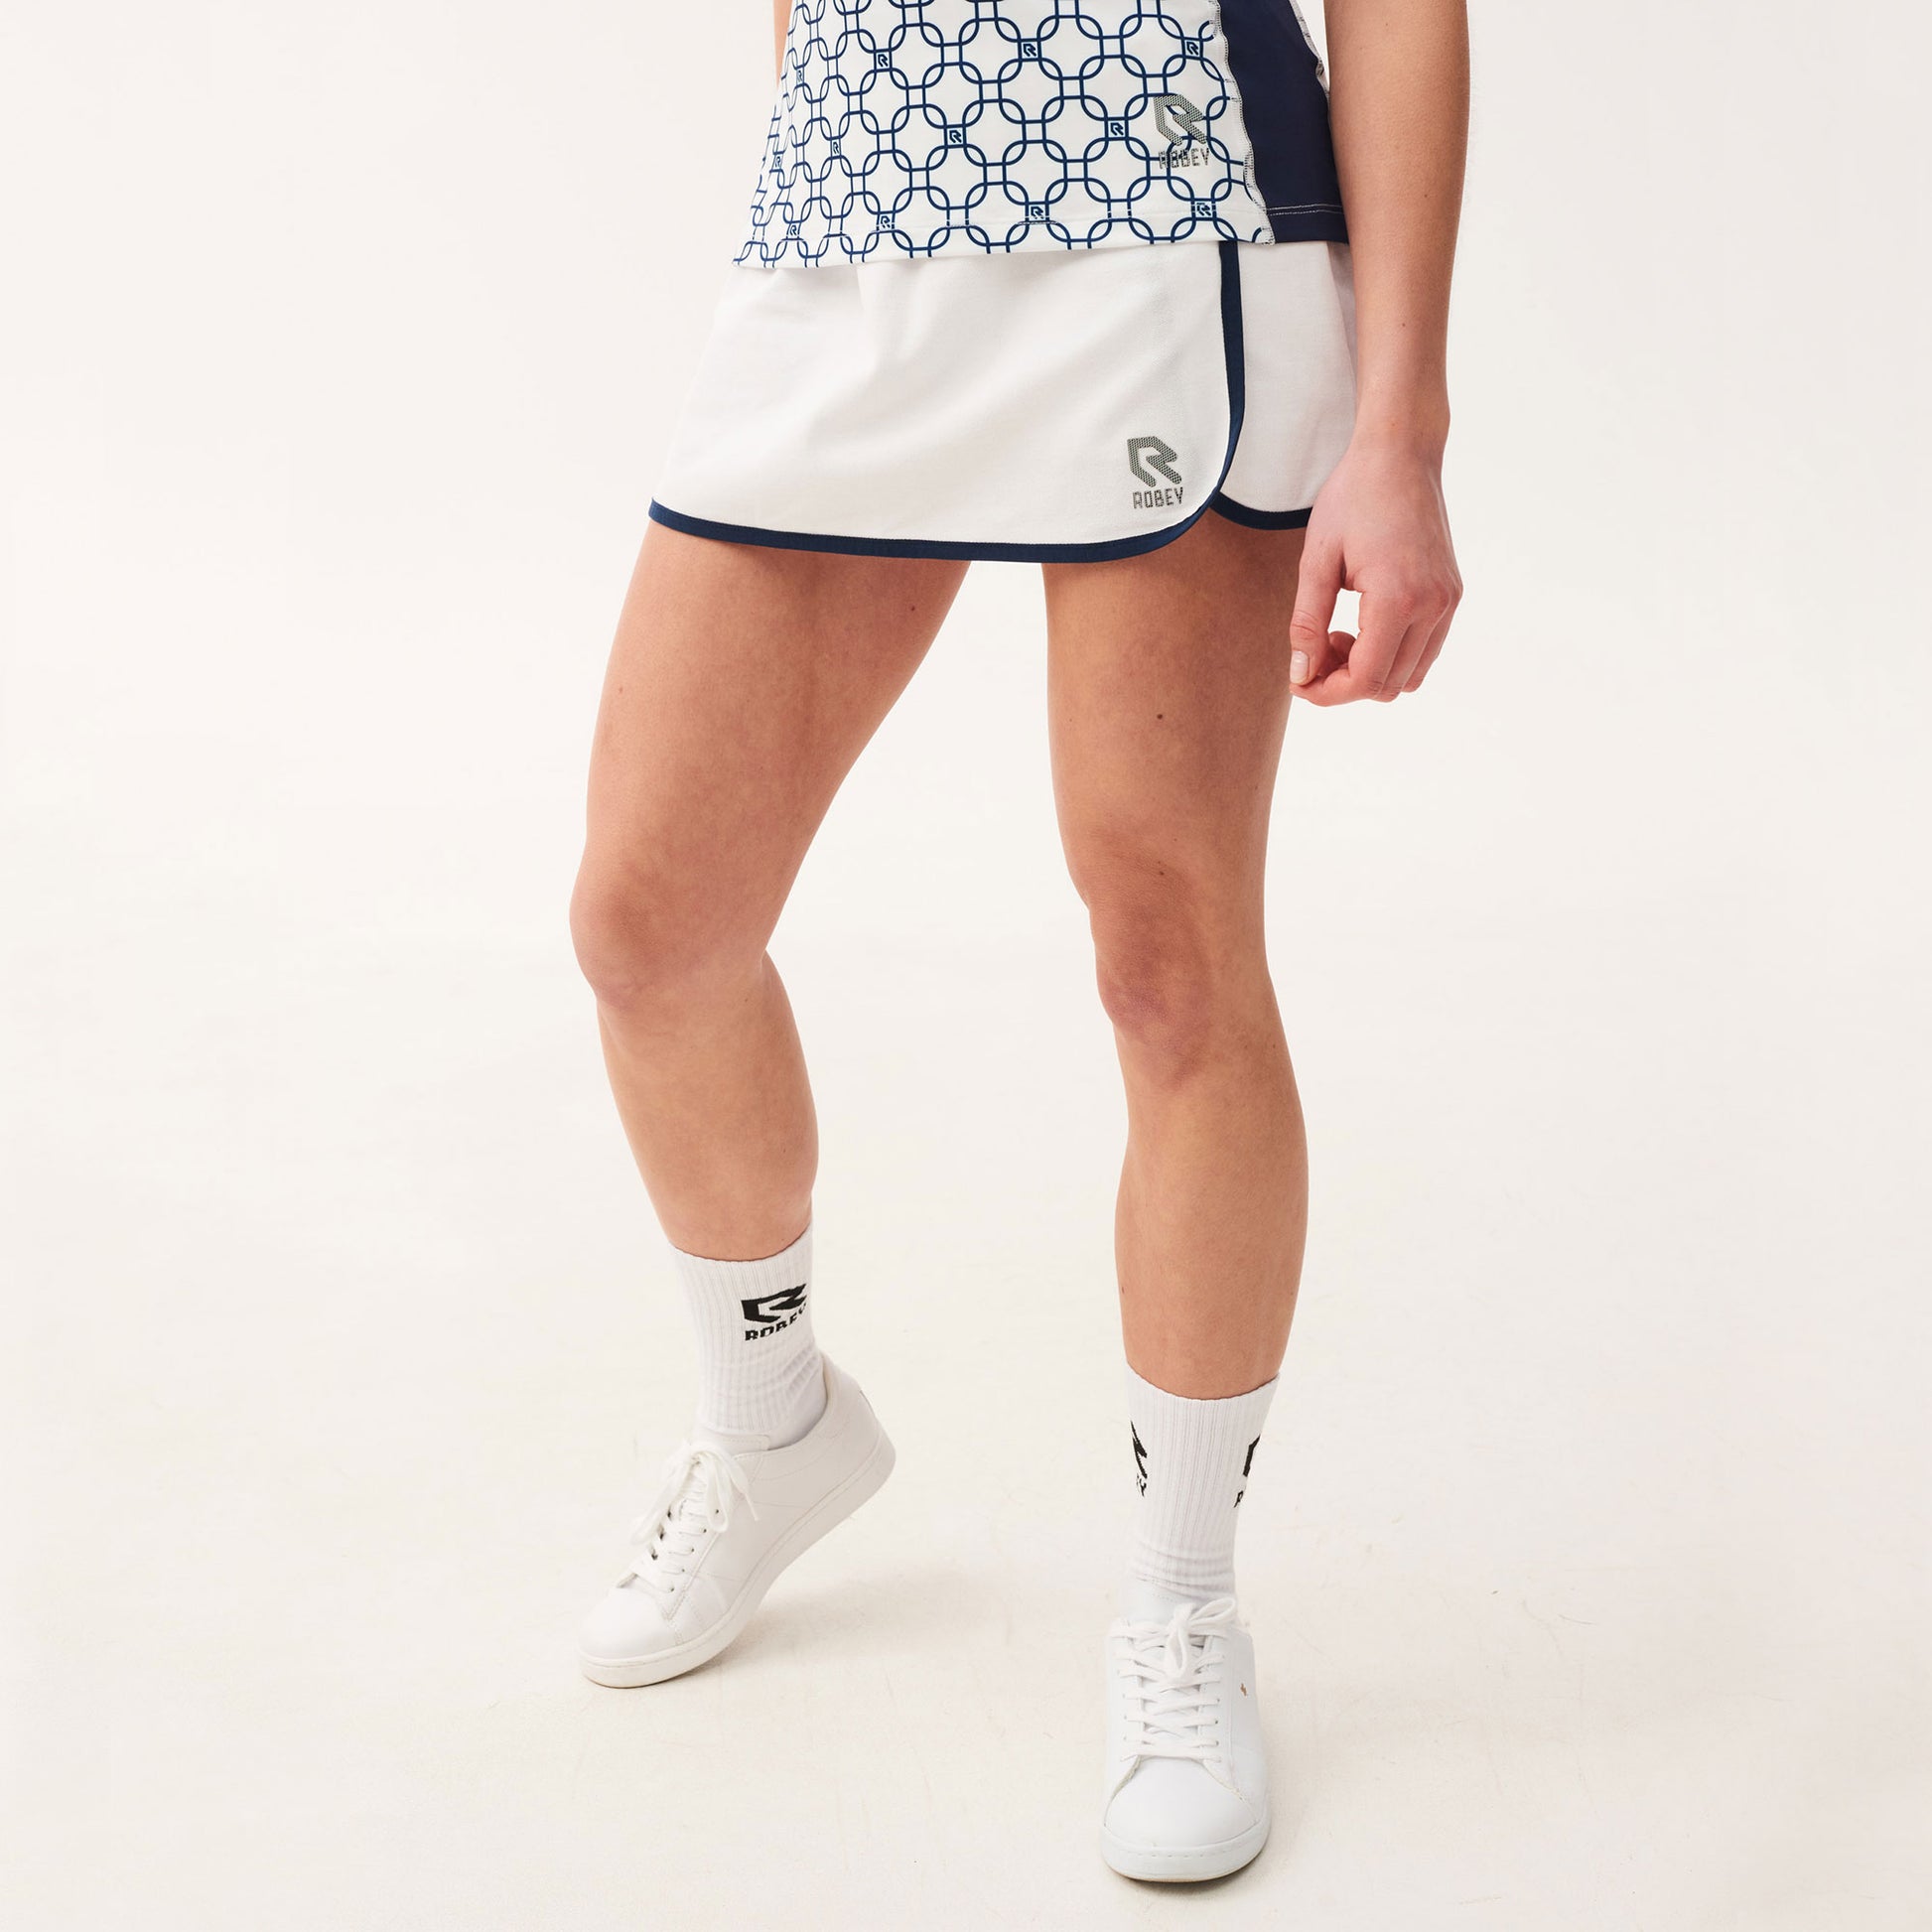 Robey Deuce Women's Wrap Tennis Skirt White (2)